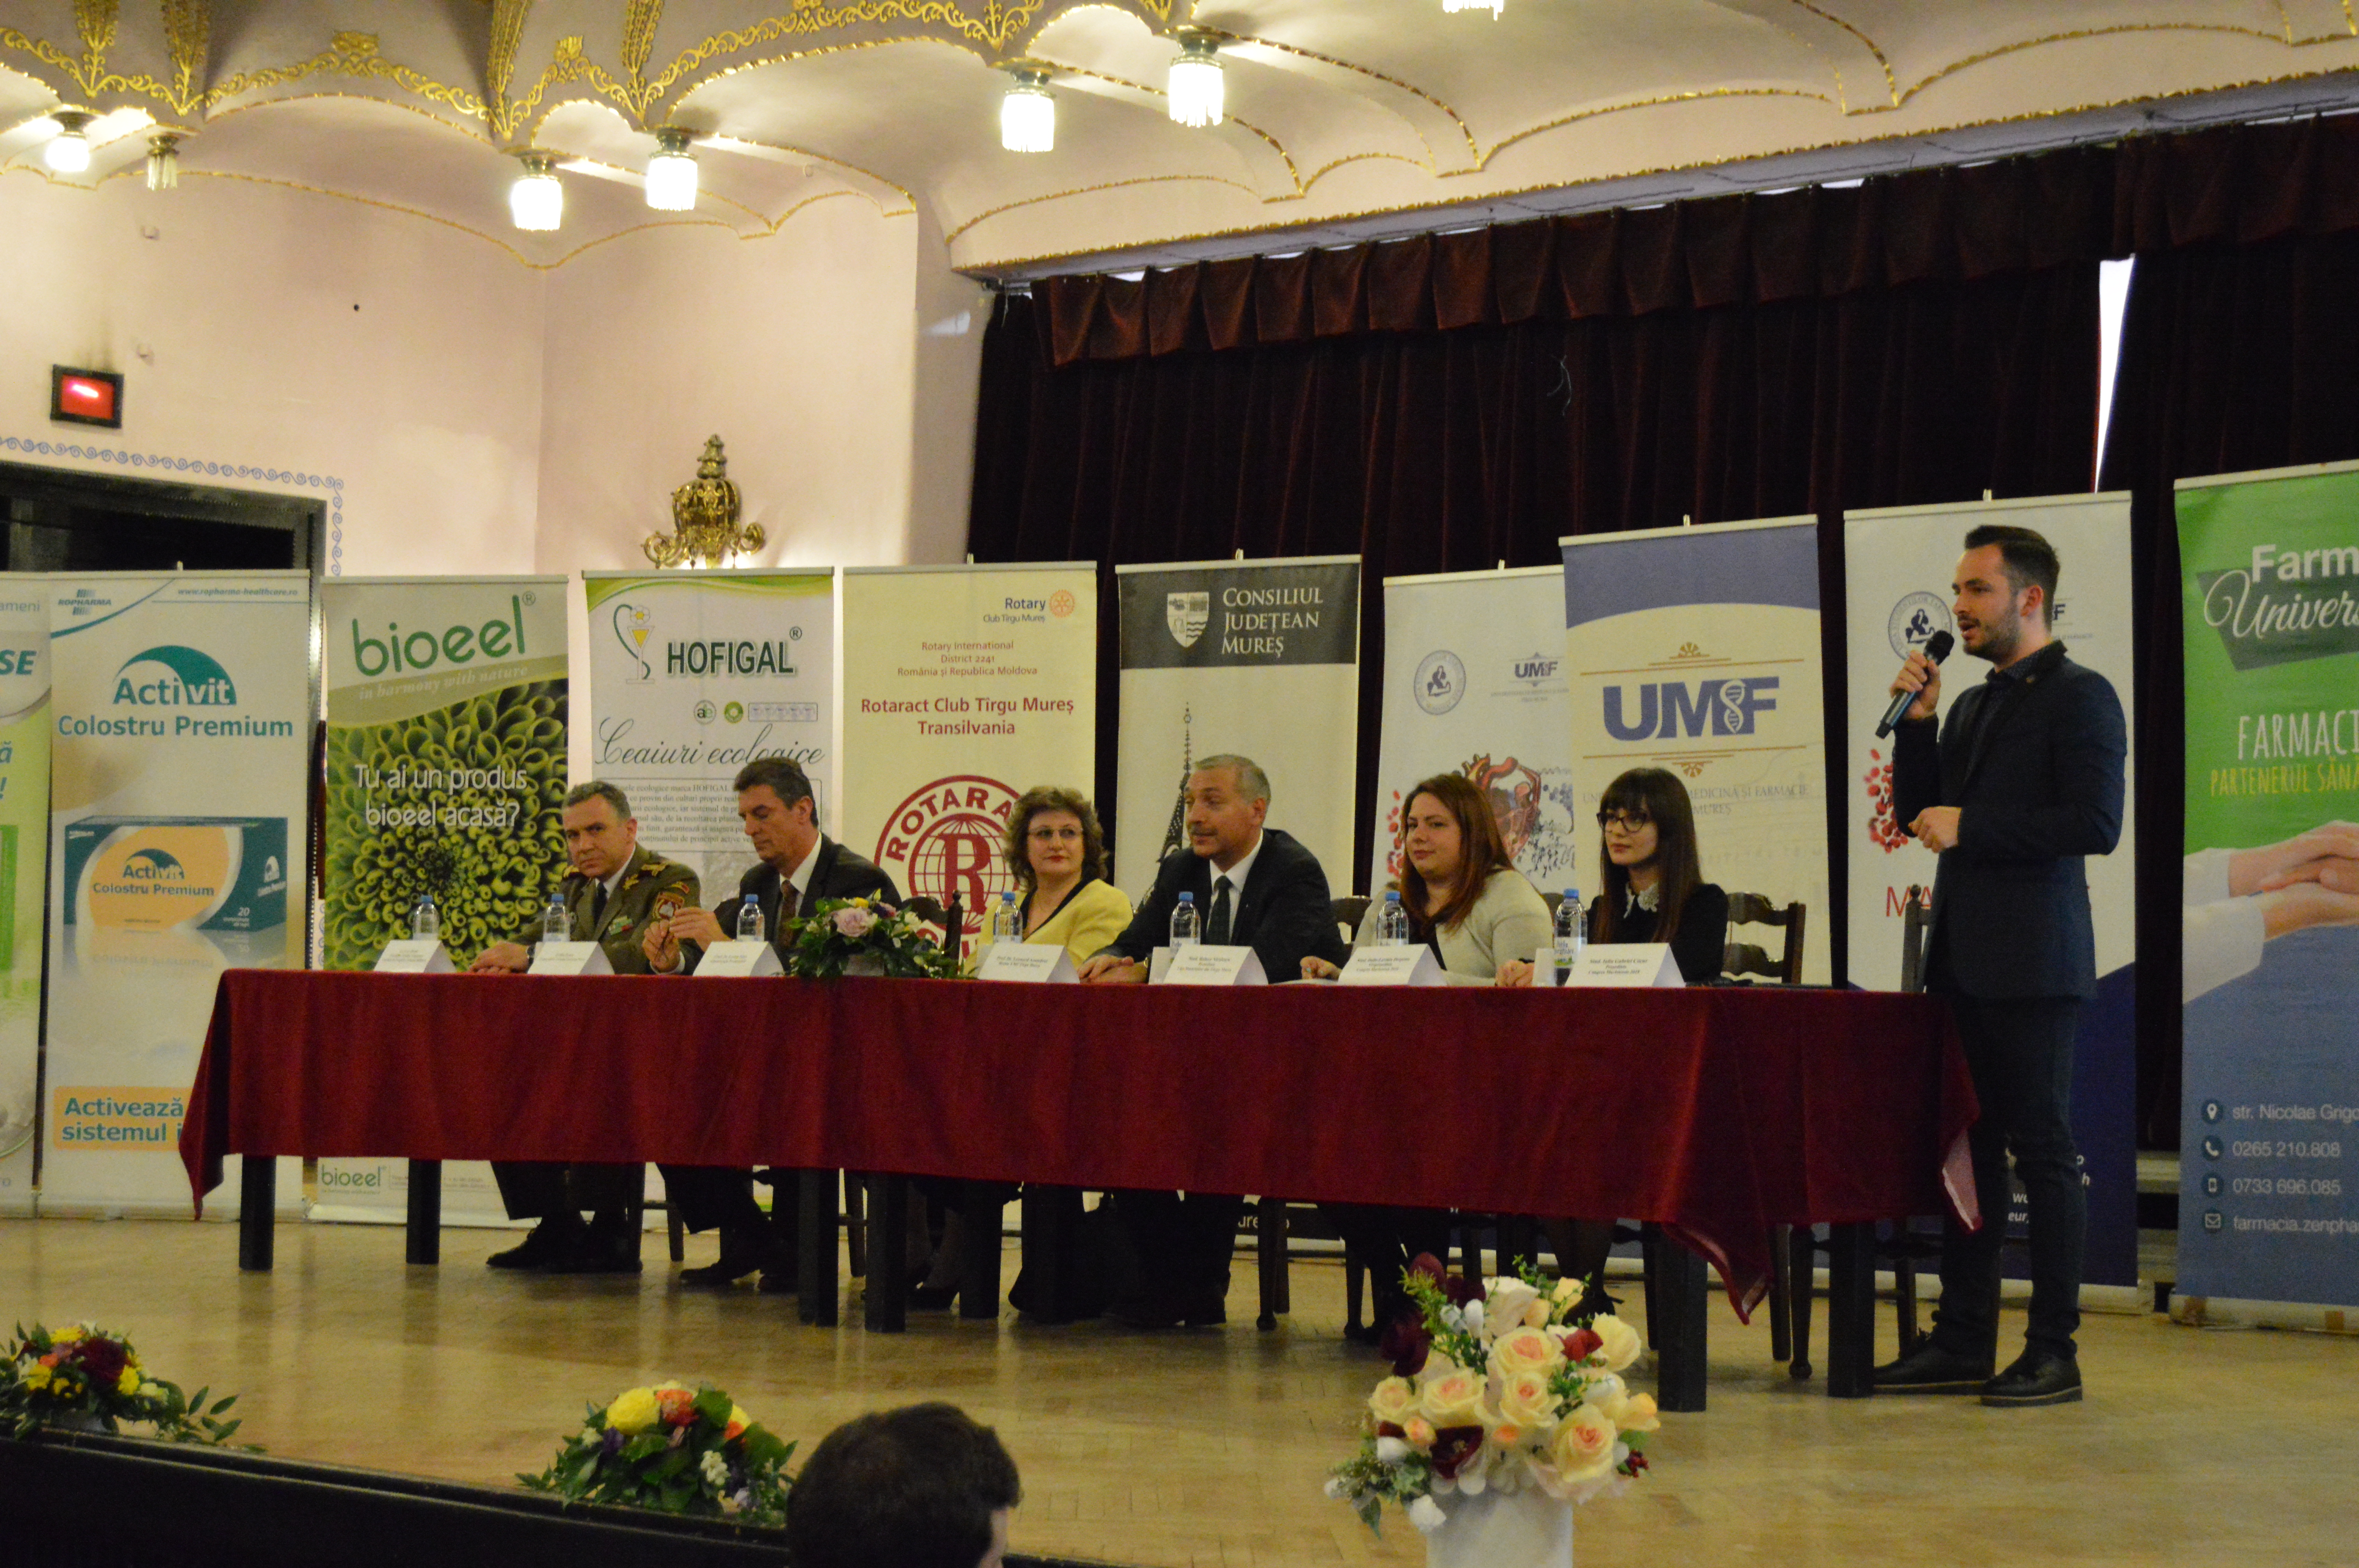 Președintele Klaus Iohannis, mesaj pentru Congresul „Marisiensis” de la UMF Tîrgu Mureș